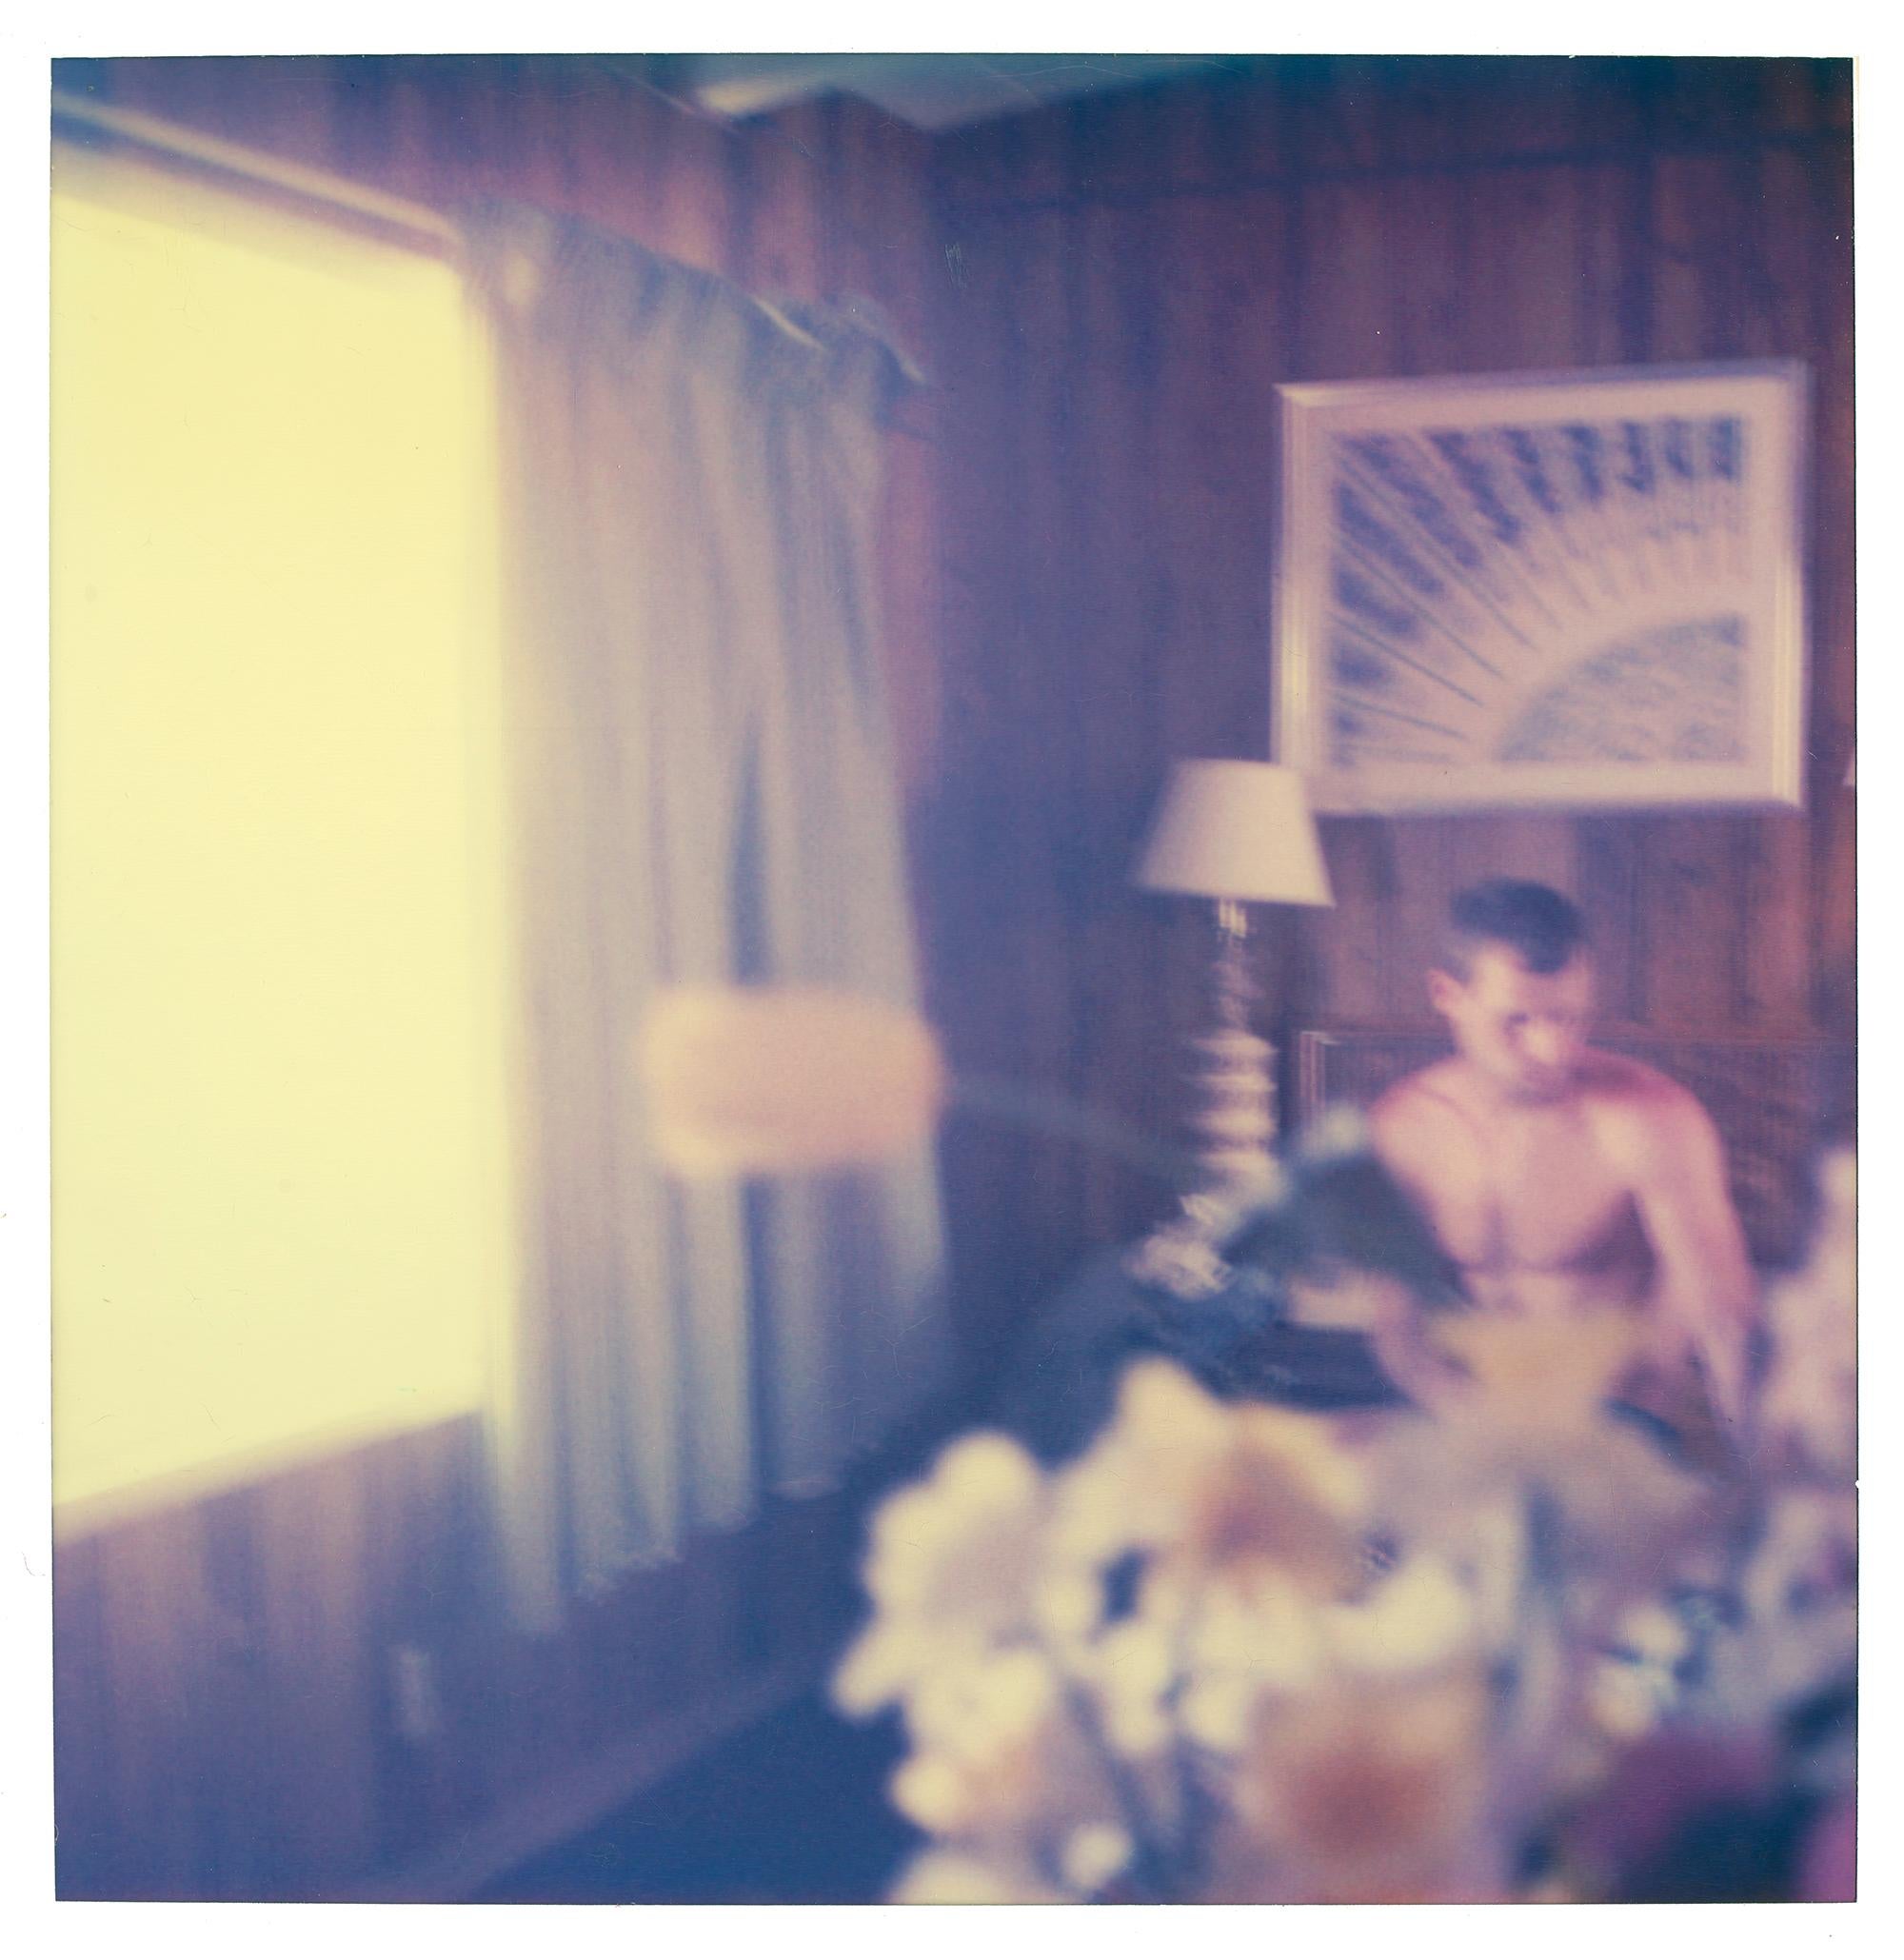 Nude Photograph Stefanie Schneider - Outtake (29 Palms, CA) - analogique, Polaroïd, Contemporain, 20e siècle